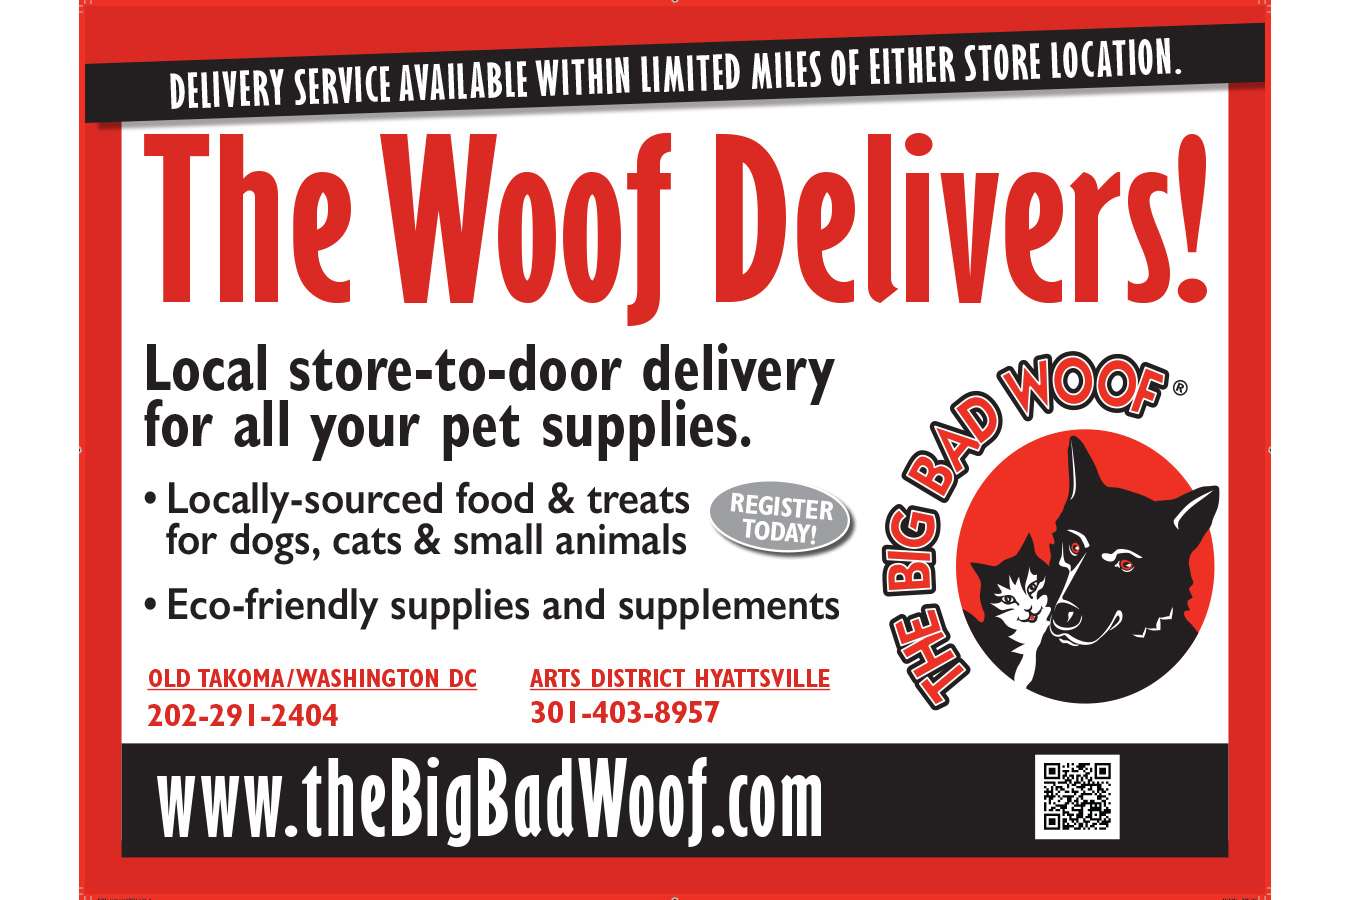 BBWoof : Magnets for Big Bad Woof Delivery Fleet